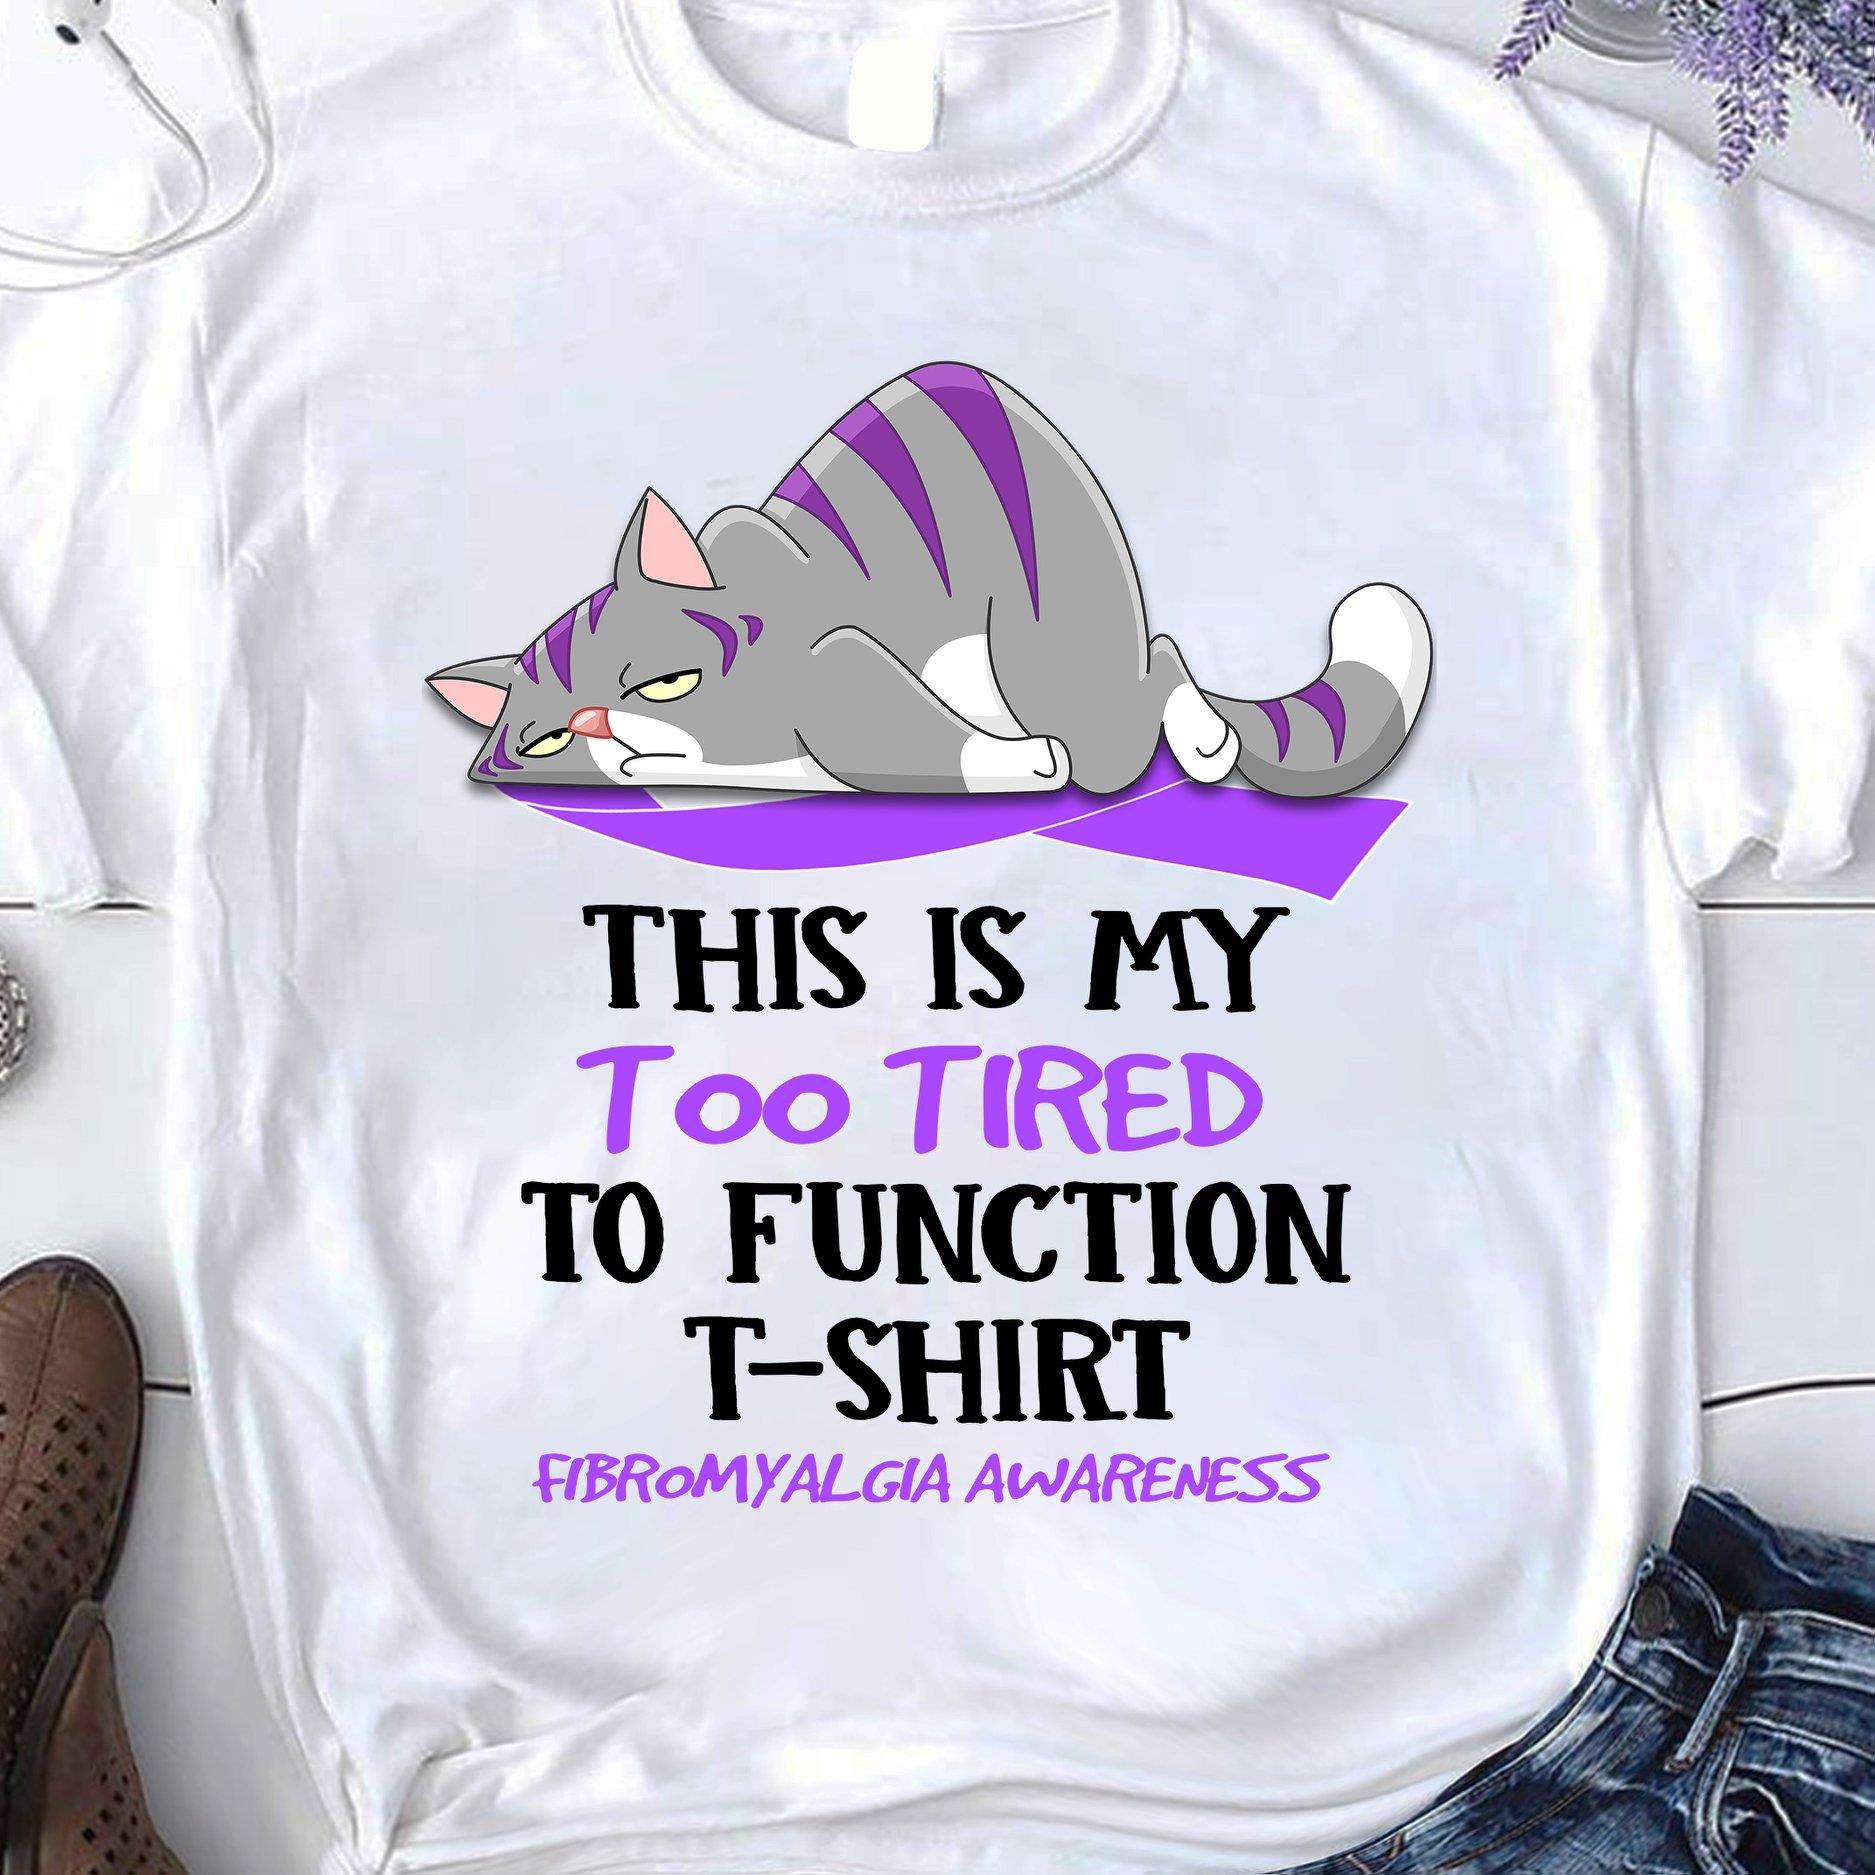 This is too tired to function T-shirt - Fibromyalgia awareness, Fibromyalgia cat